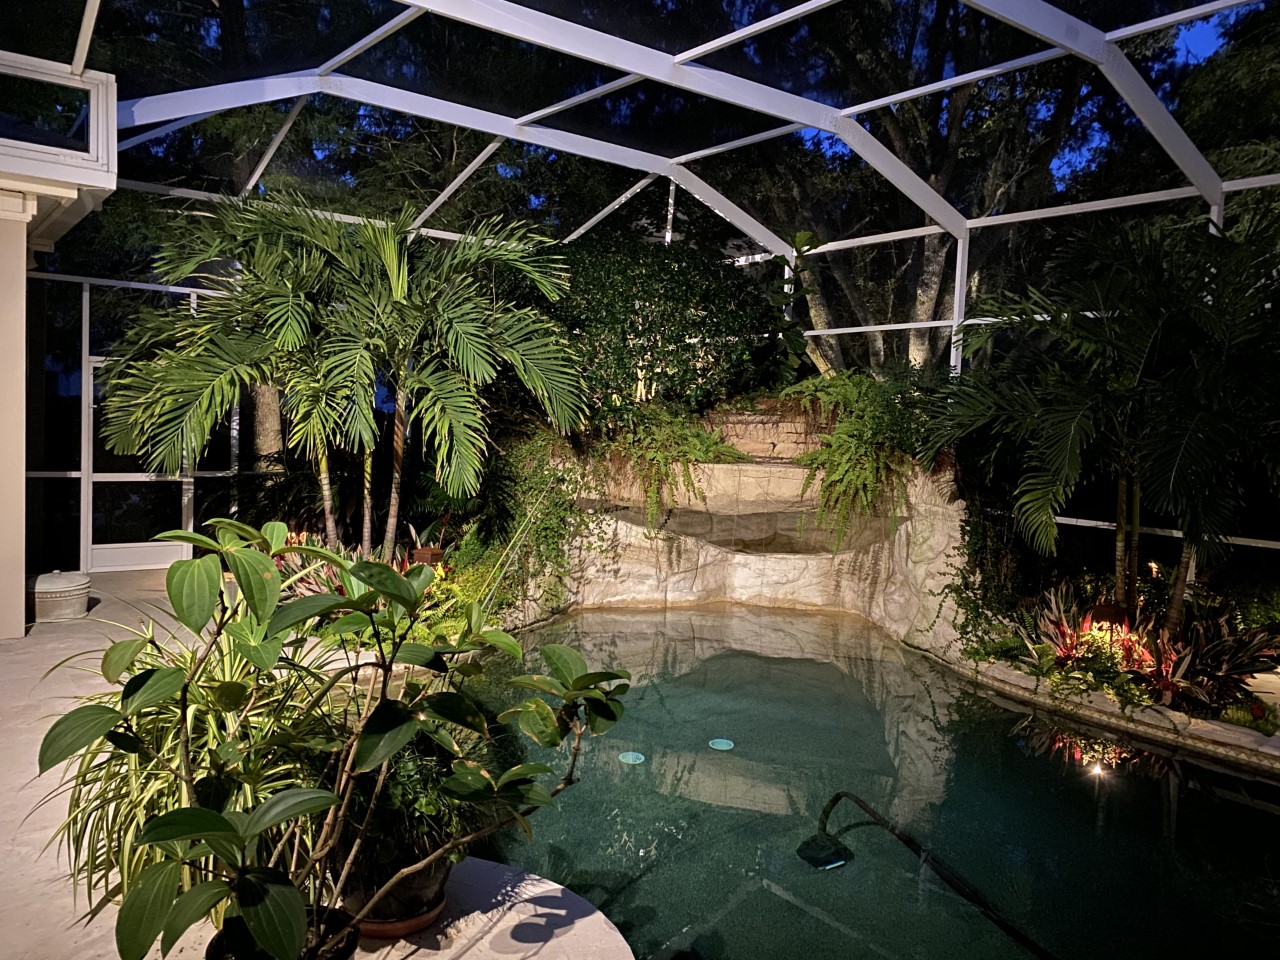 oldsmar pool and waterfall lighting